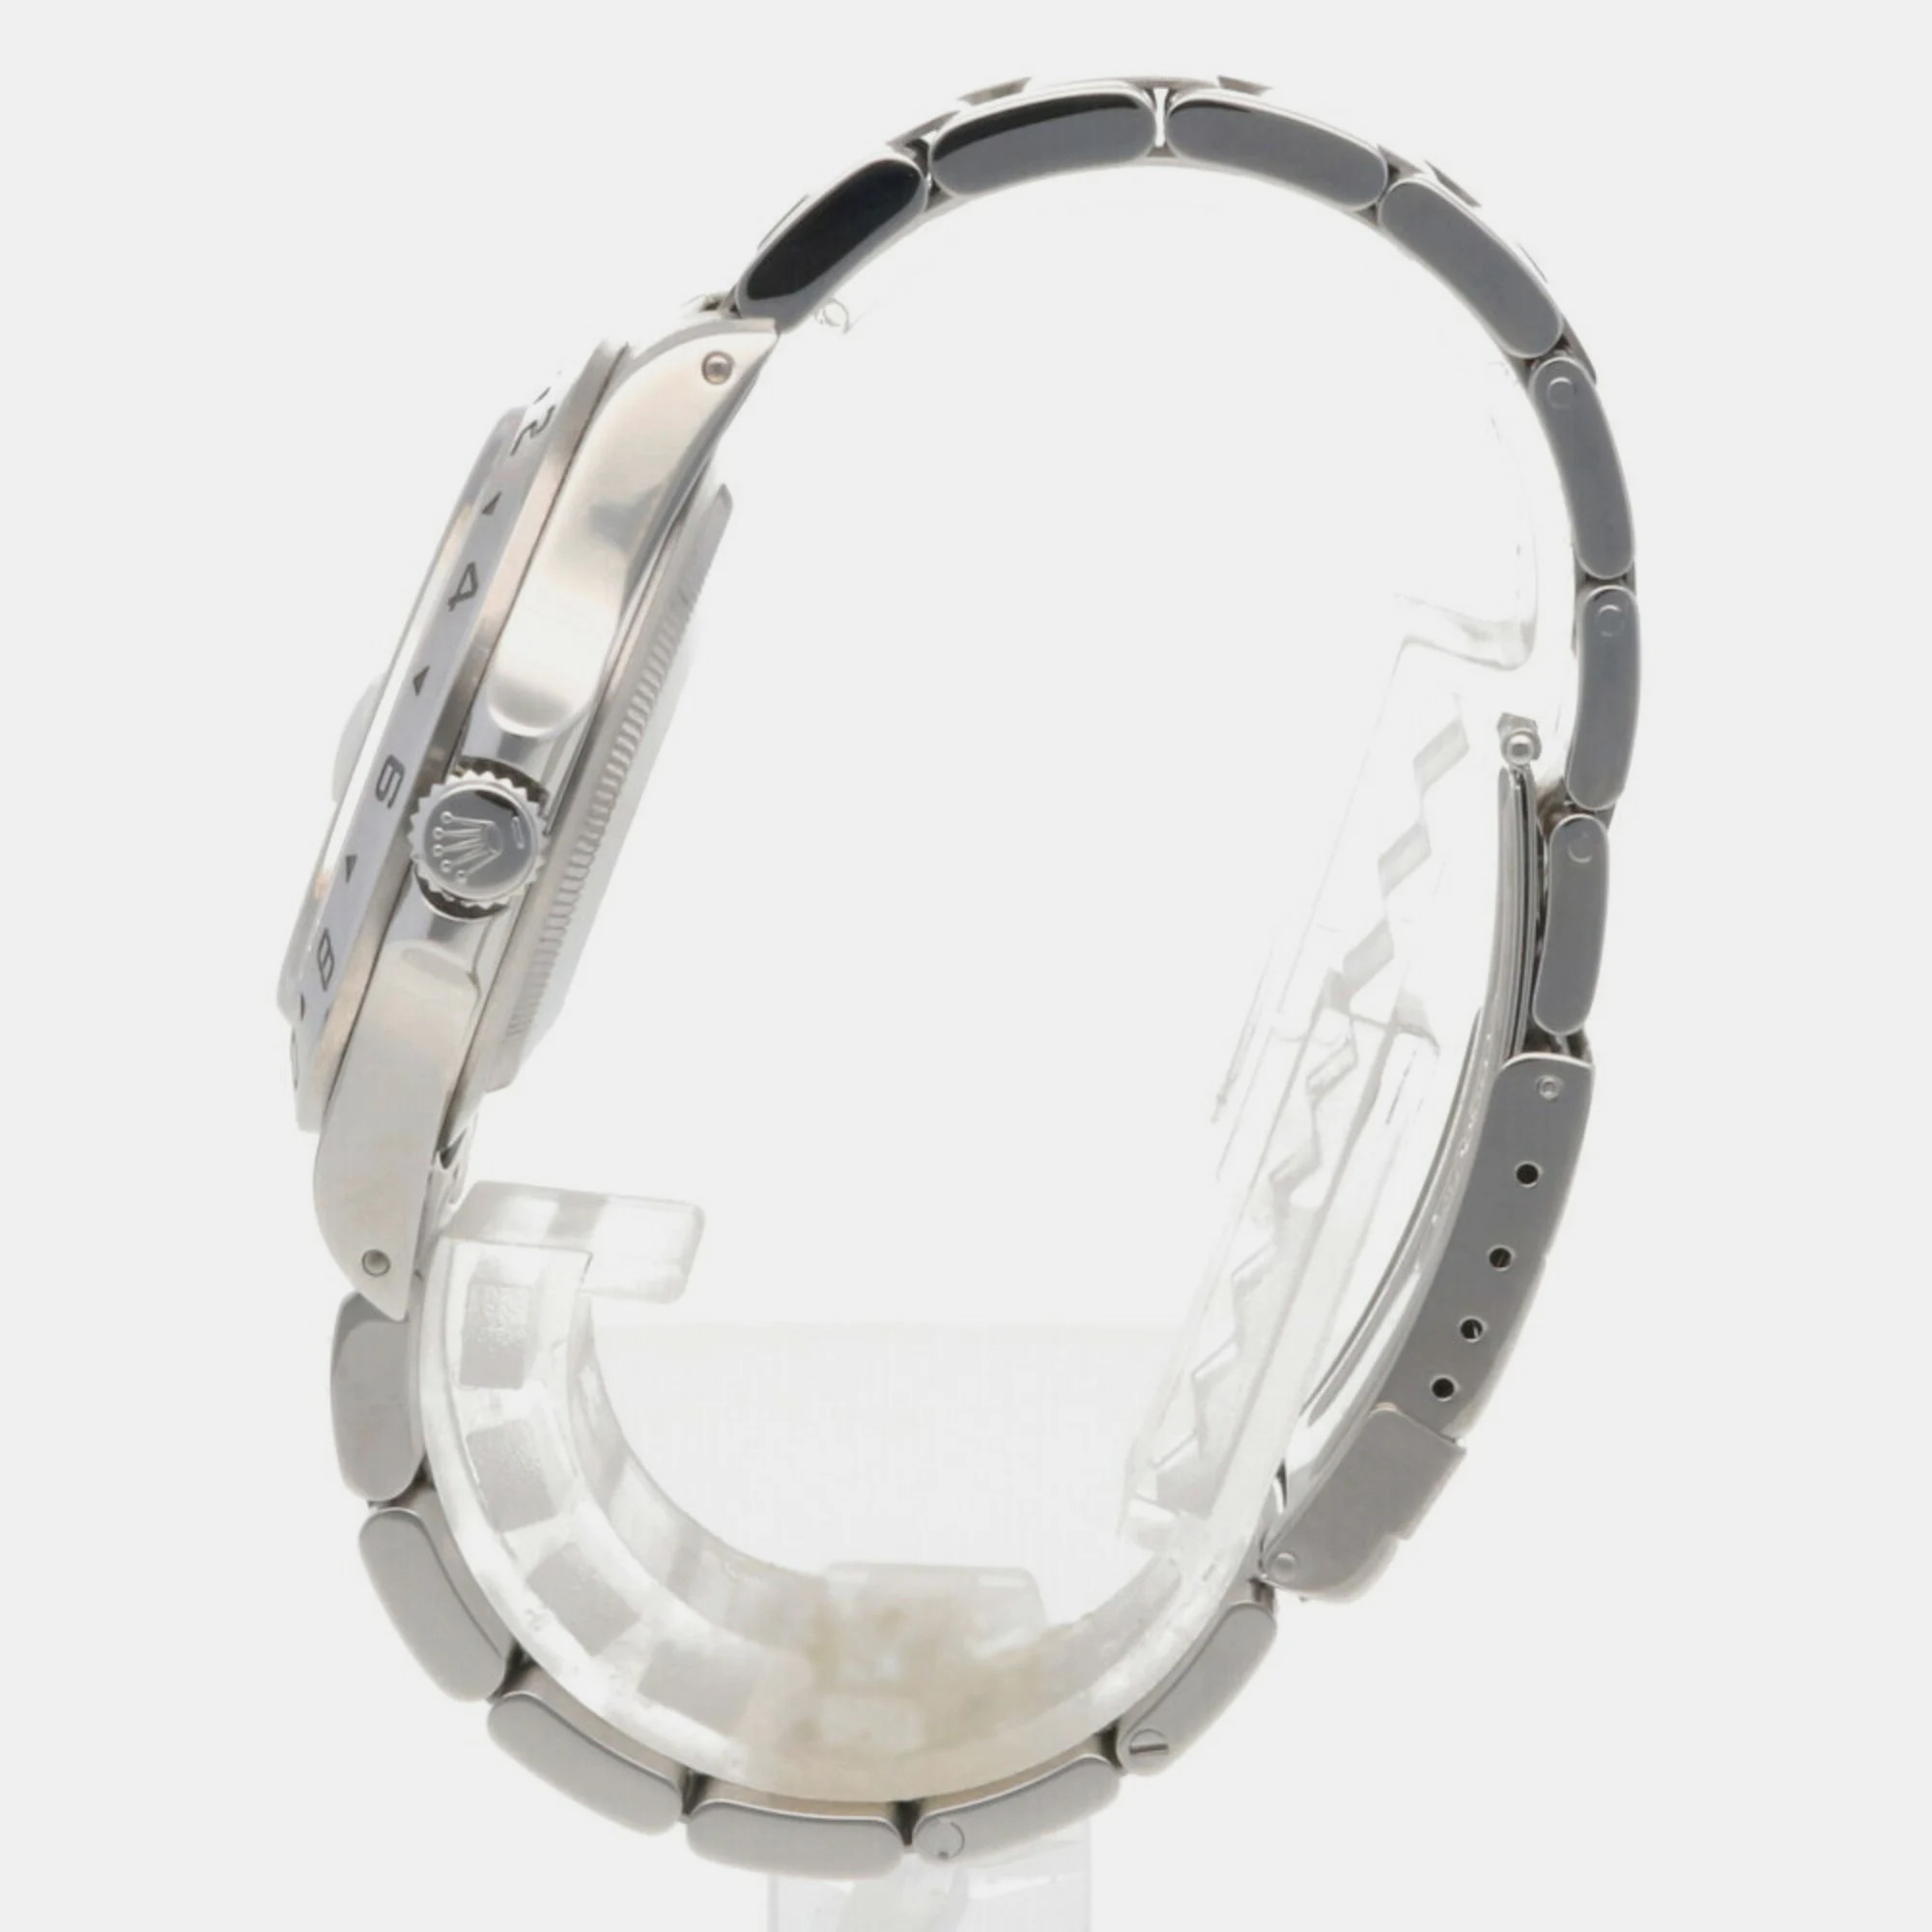 Rolex White Stainless Steel Explorer 16570 Automatic Men's Wristwatch 41 Mm